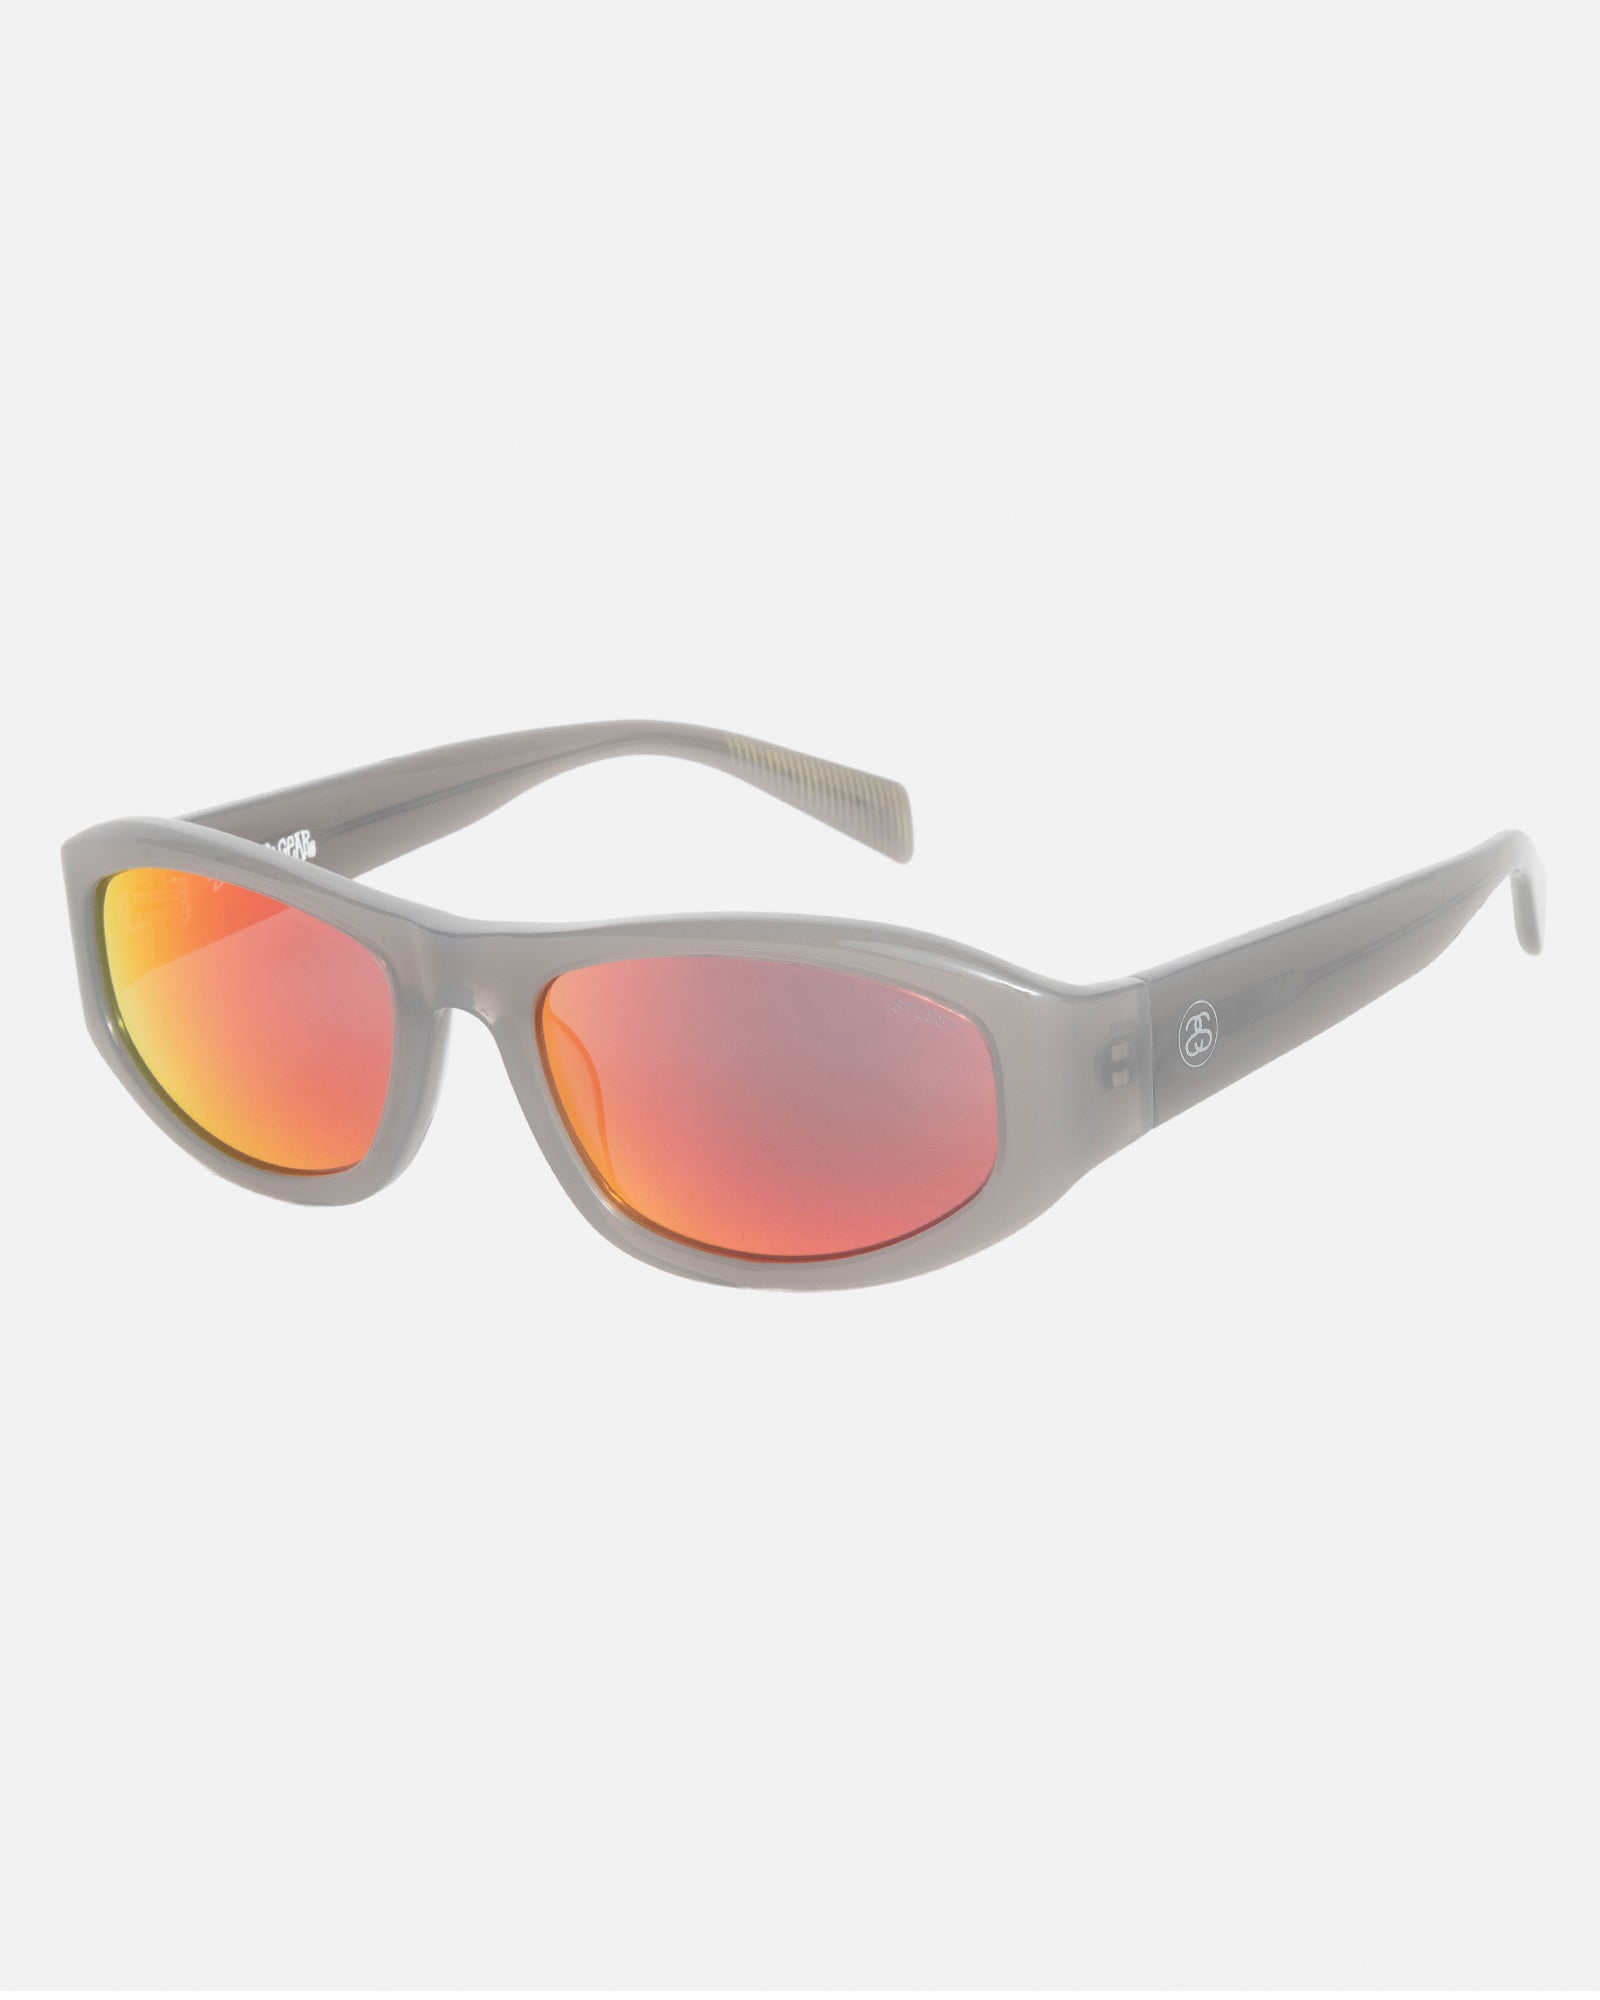 Stüssy Landon Sunglasses Grey / Silver Flare Lens Eyewear